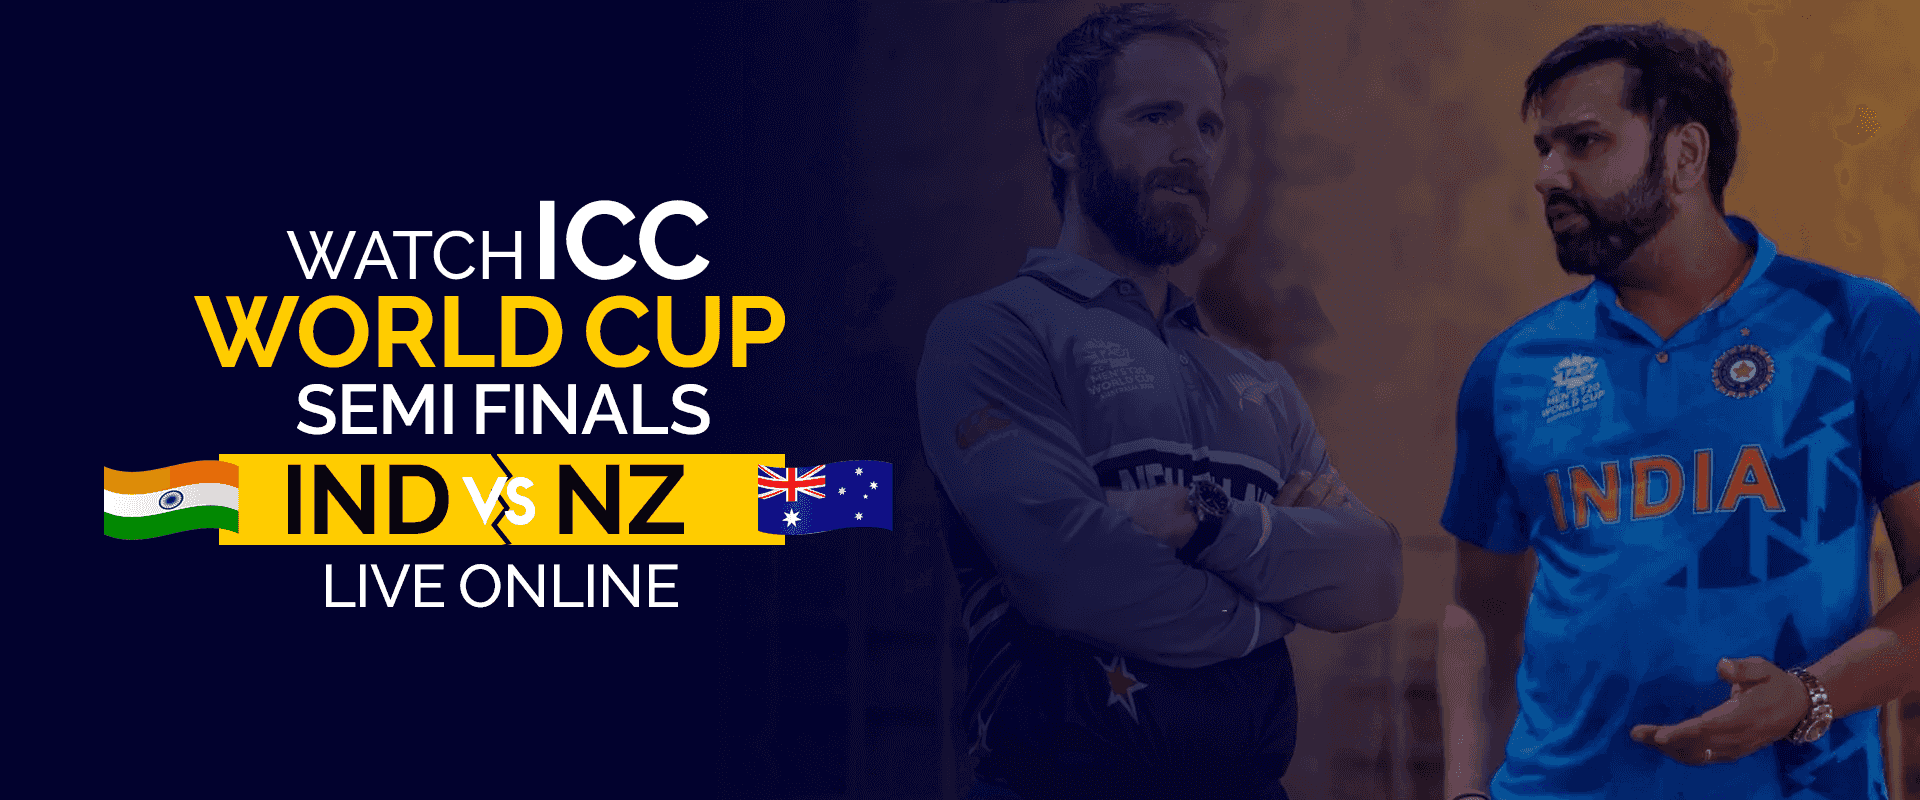 Watch ICC World Cup Semi-Finals IND vs NZ Live Online